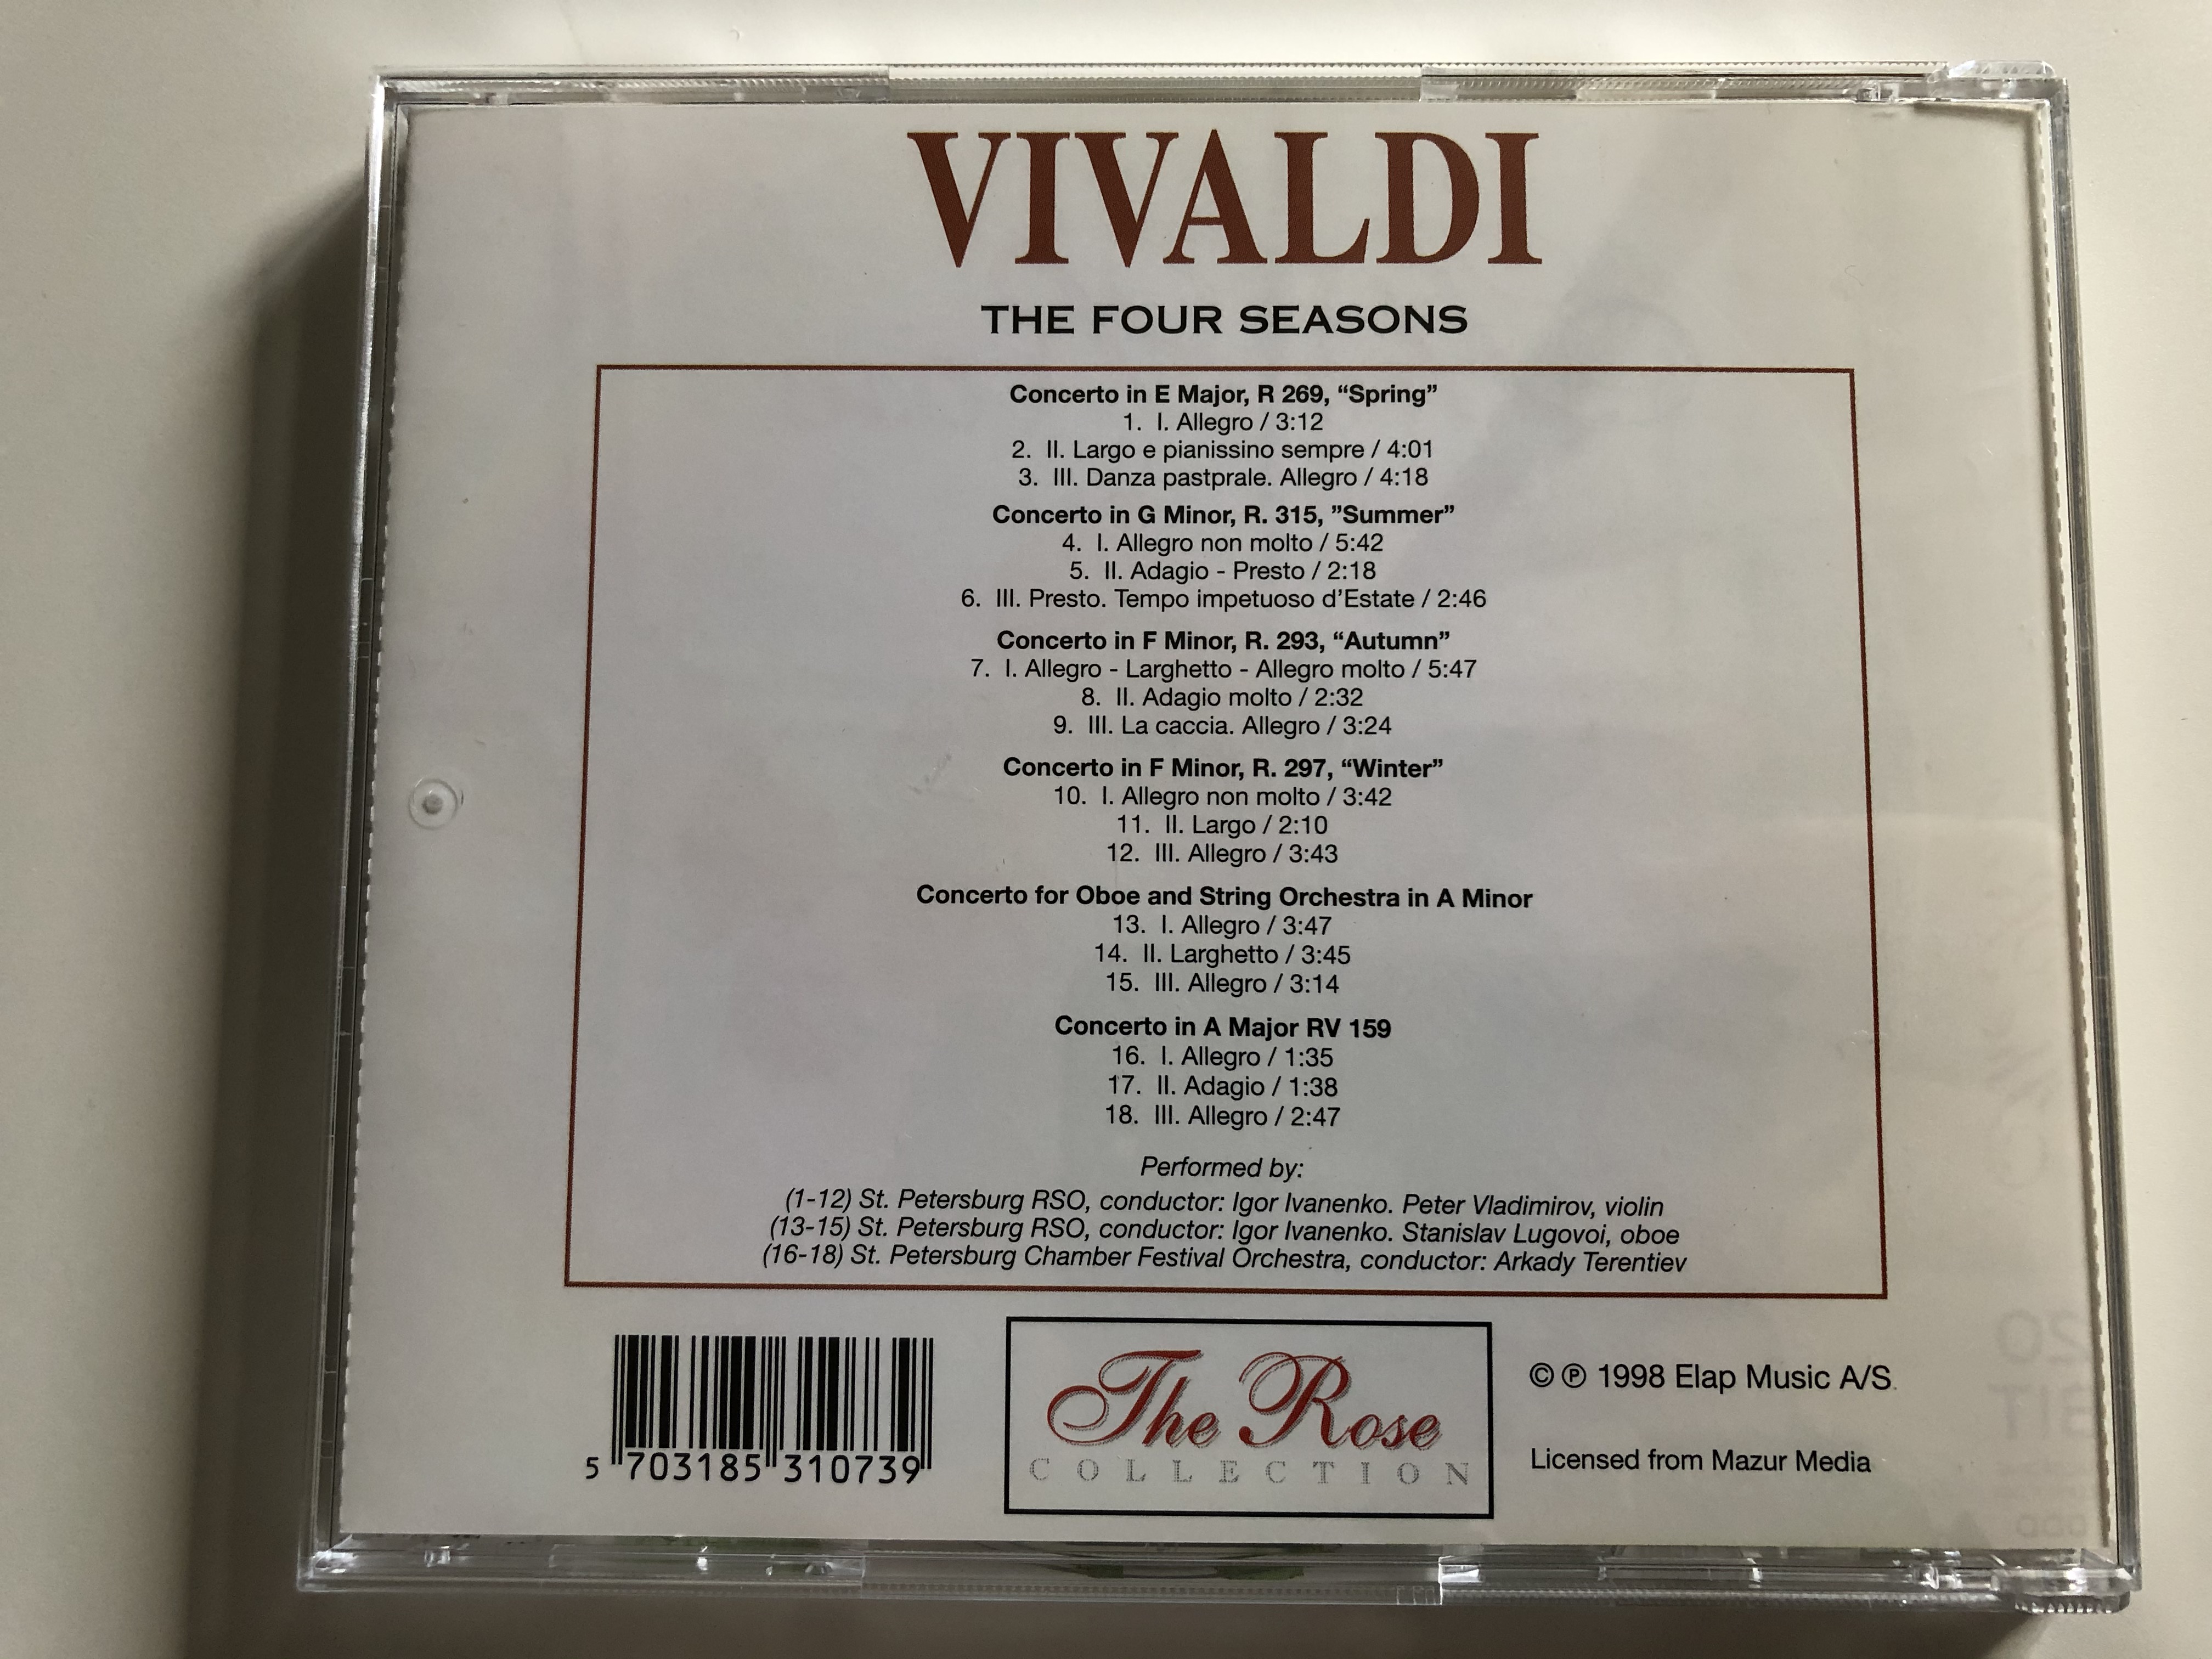 Vivaldi ‎– The Four Seasons / Playingtime 61 min. / The Rose Collection /  Elap Music Audio CD 1998 / 44100CD - bibleinmylanguage